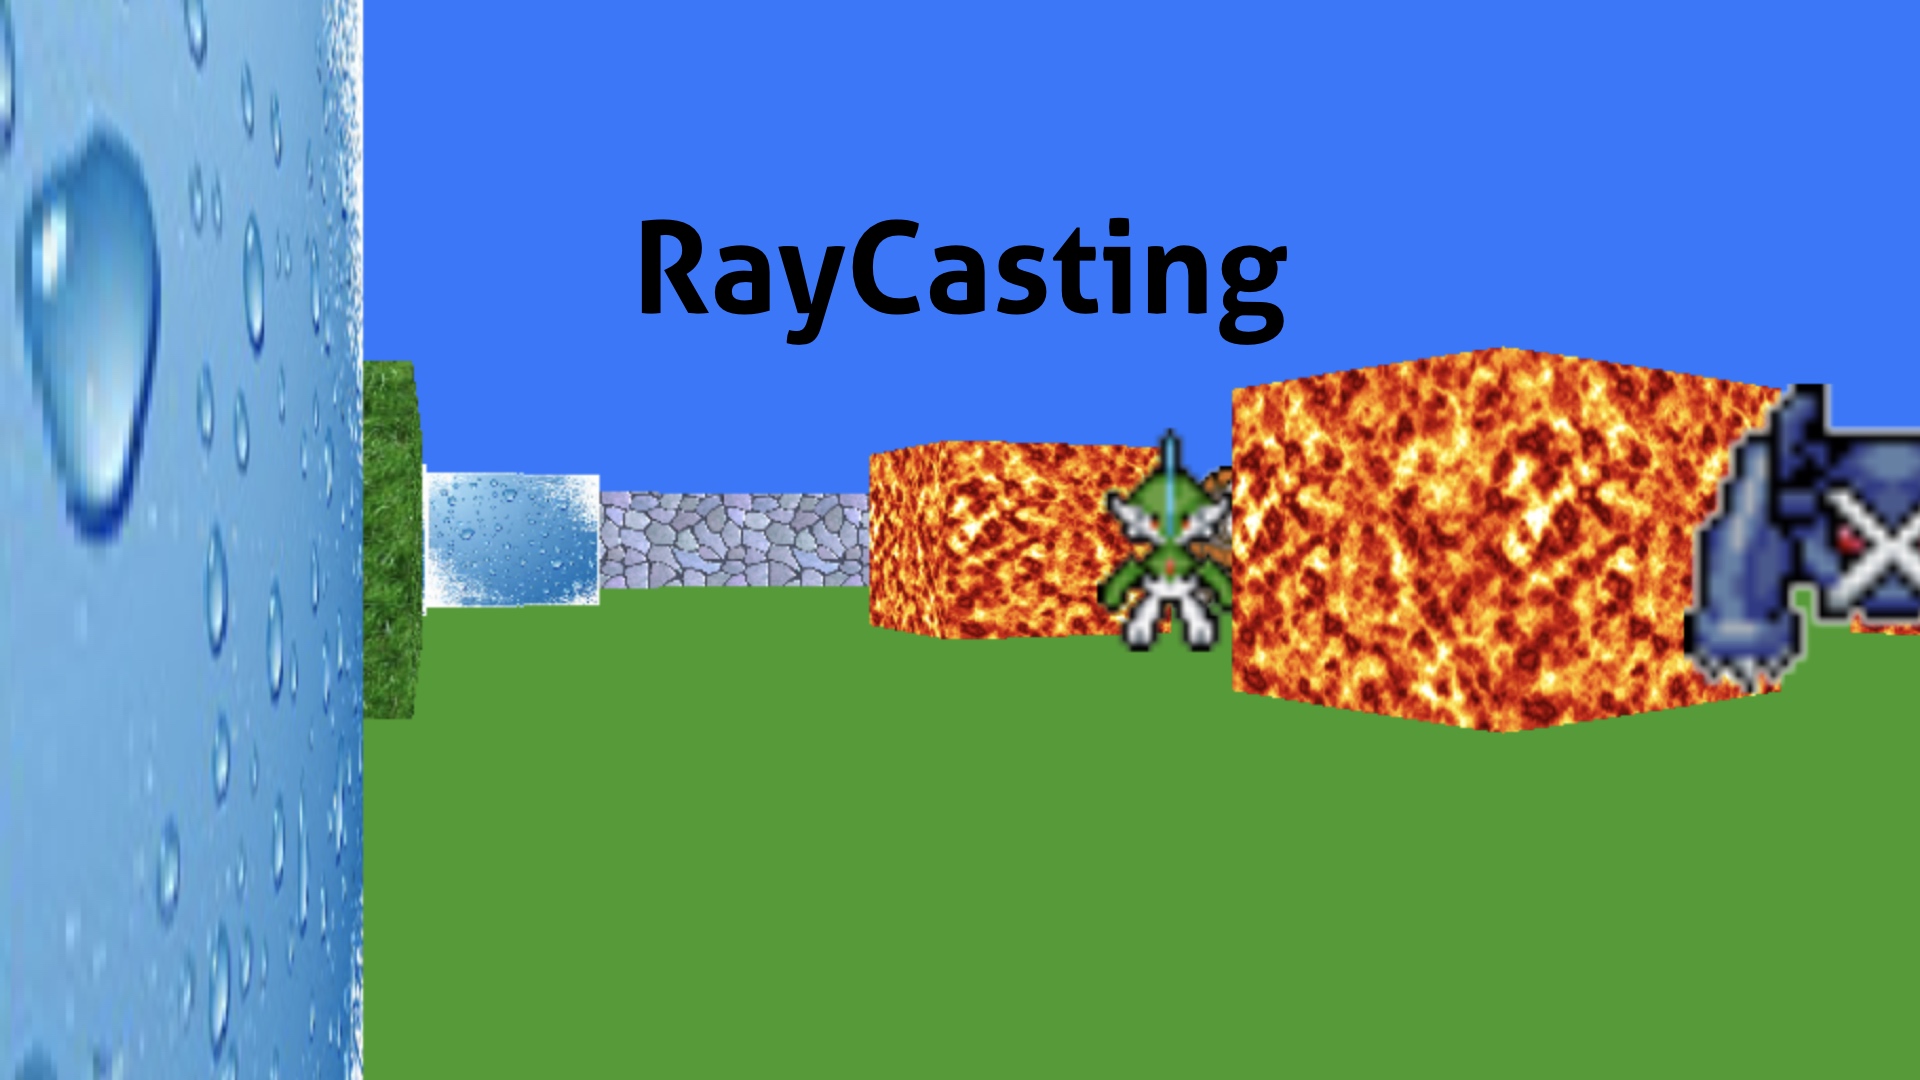 RayCasting